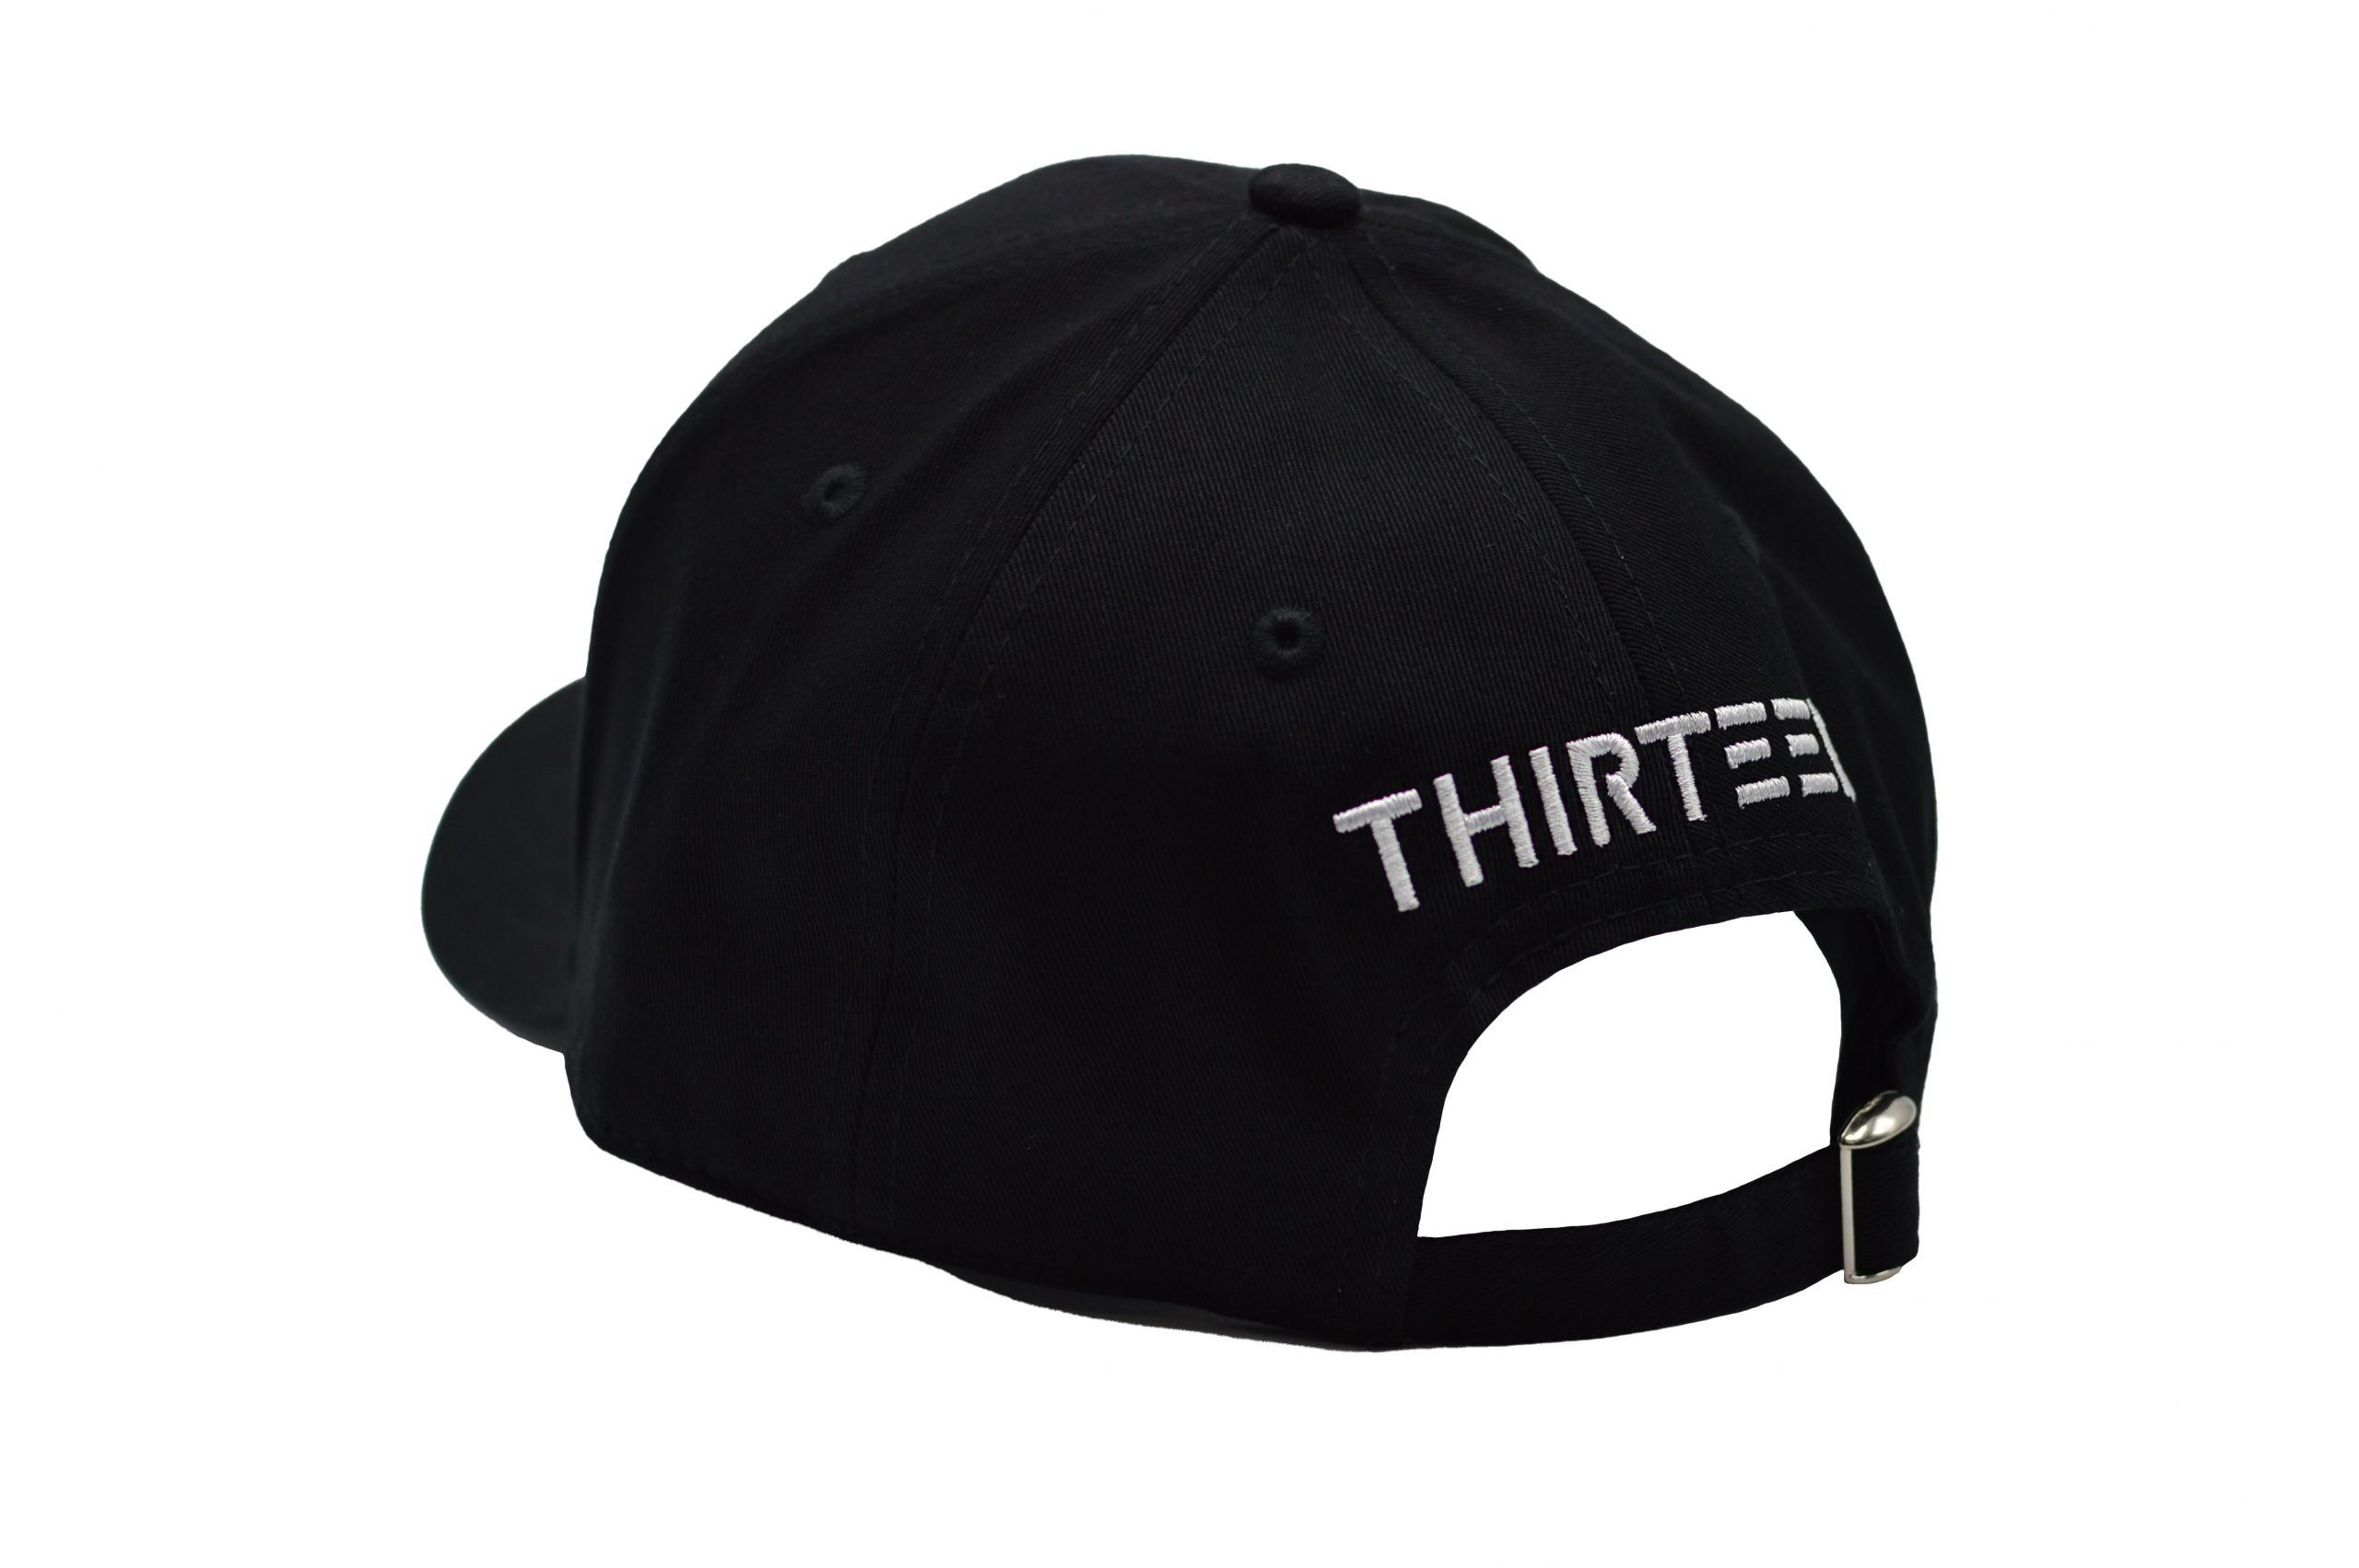 EMPIRE-THIRTEEN Baseball white "EMPIRE" Cap and black CAP